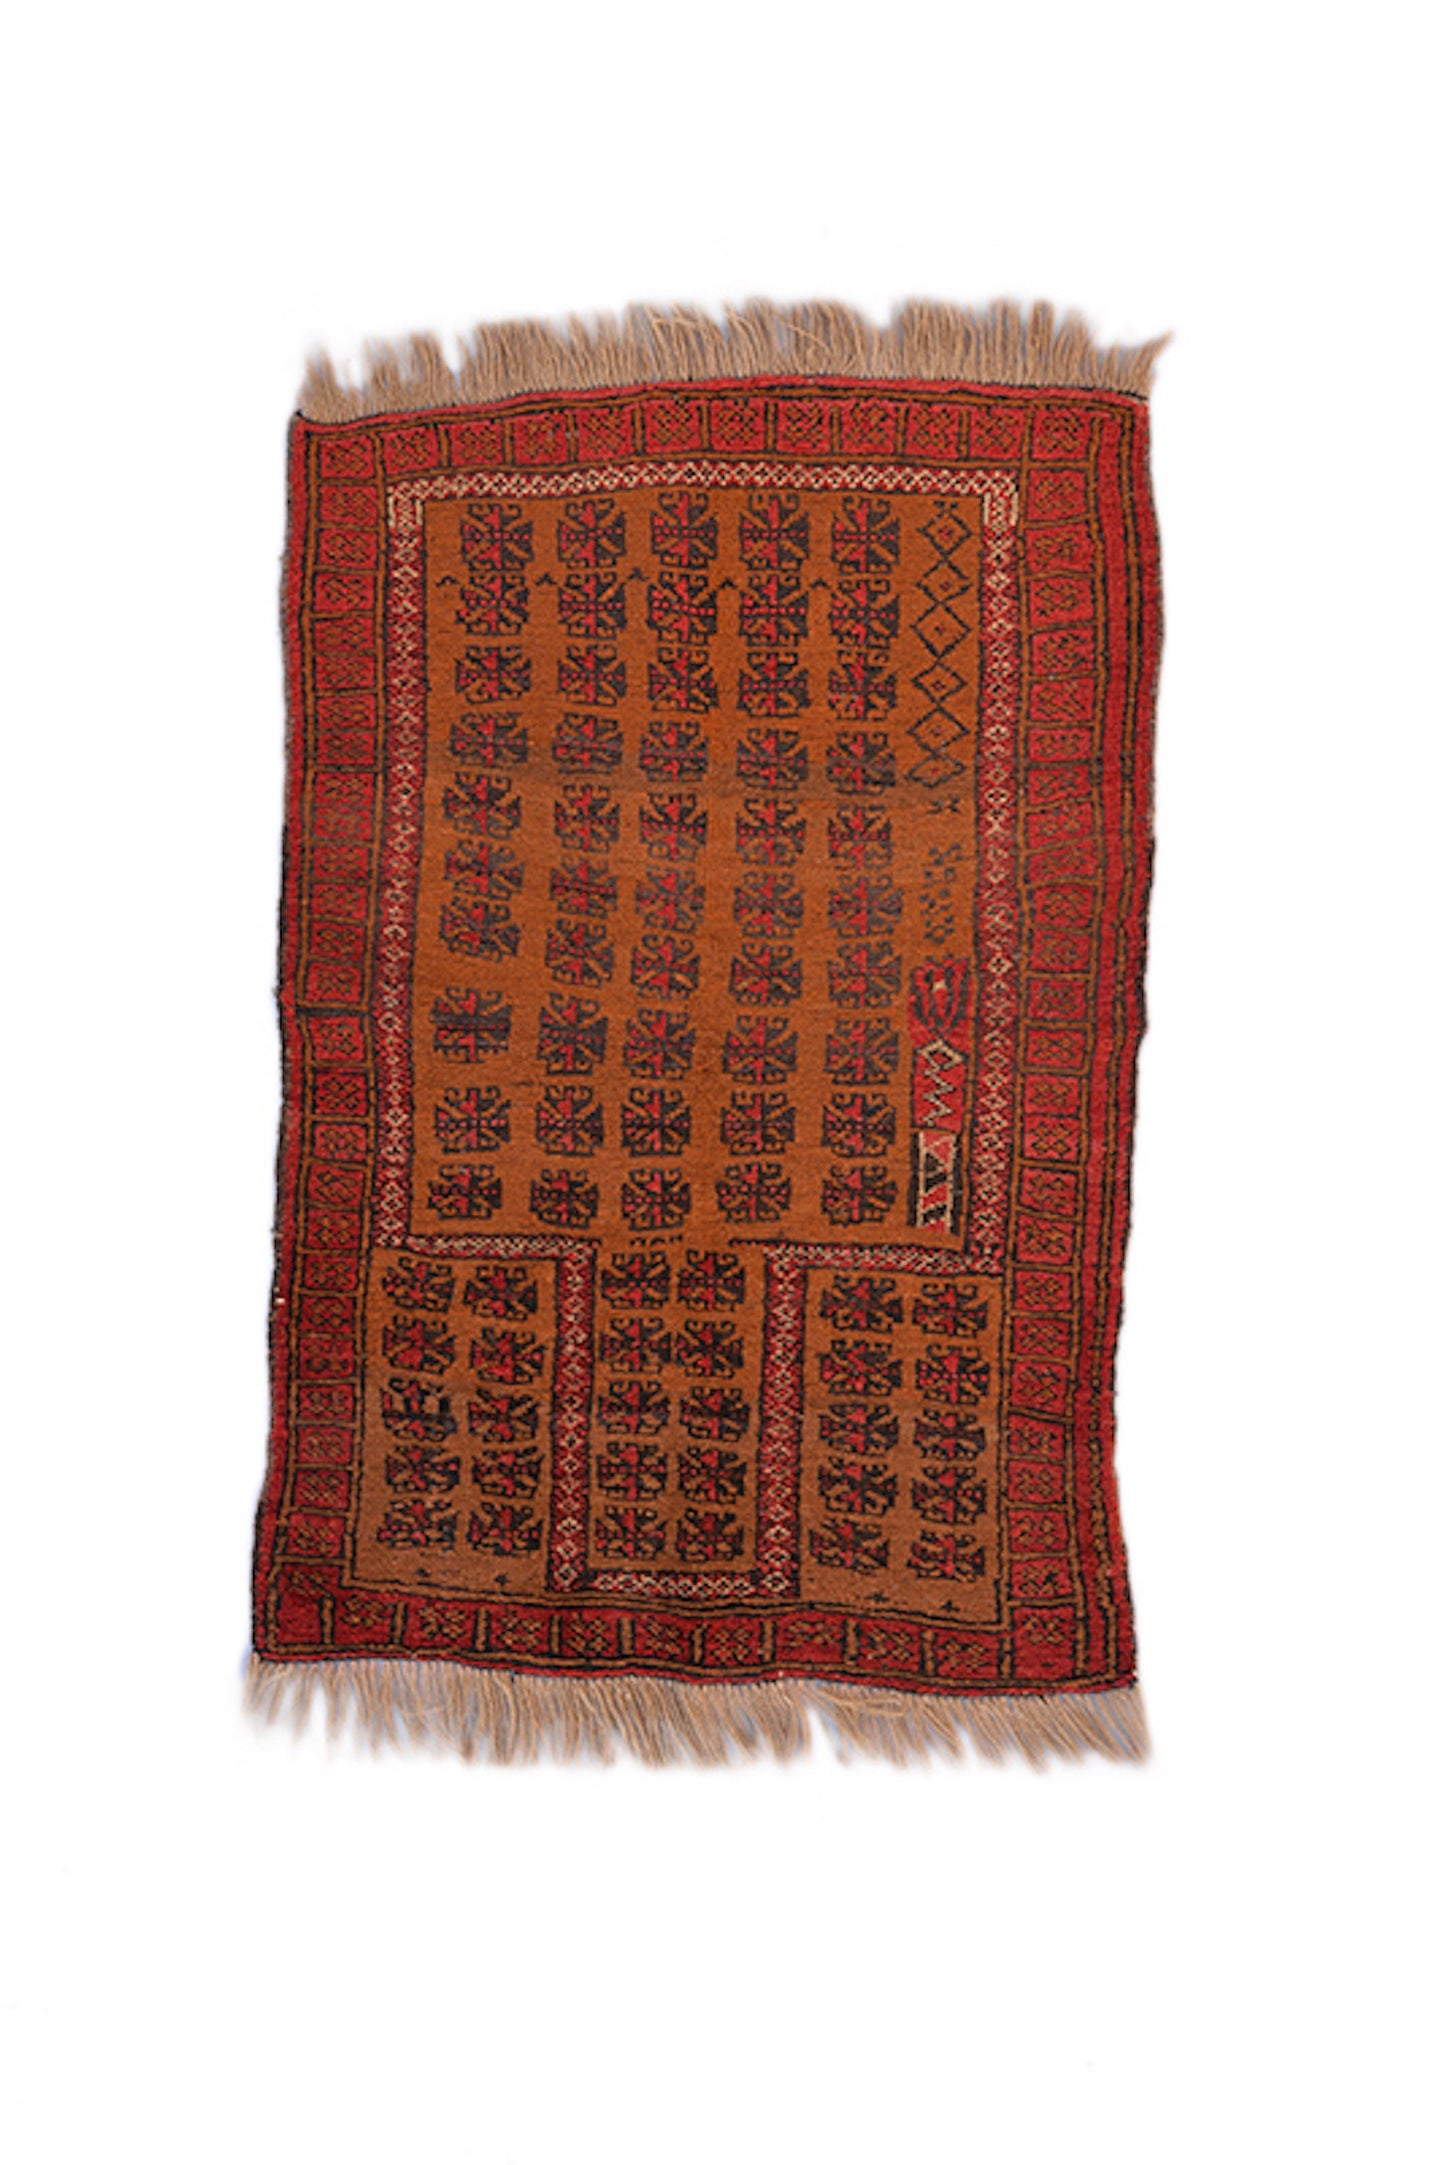 Vintage Brown Orange 3x4 Handmade Rug | Geometric Tribal Nomadic Pattern woven with Dyed Wool